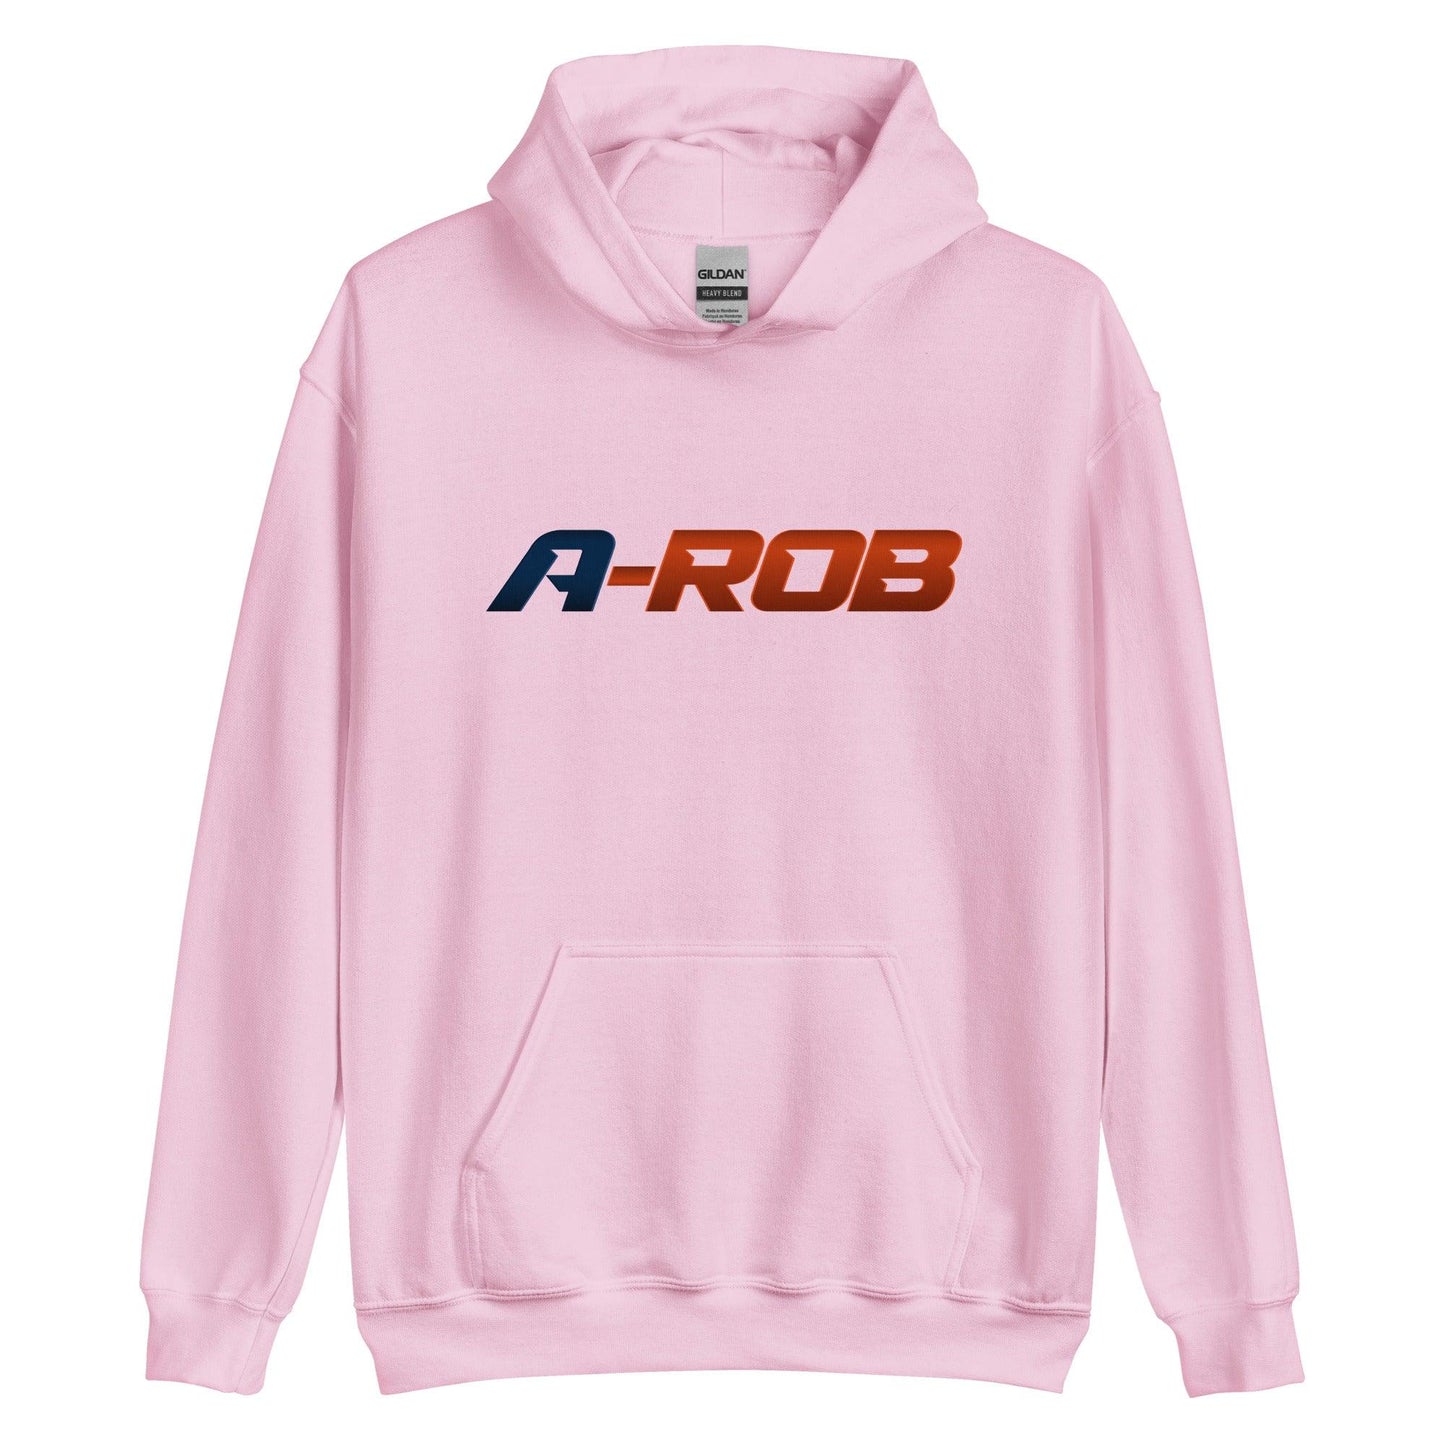 Anthony Robinson "A-ROB" Hoodie - Fan Arch